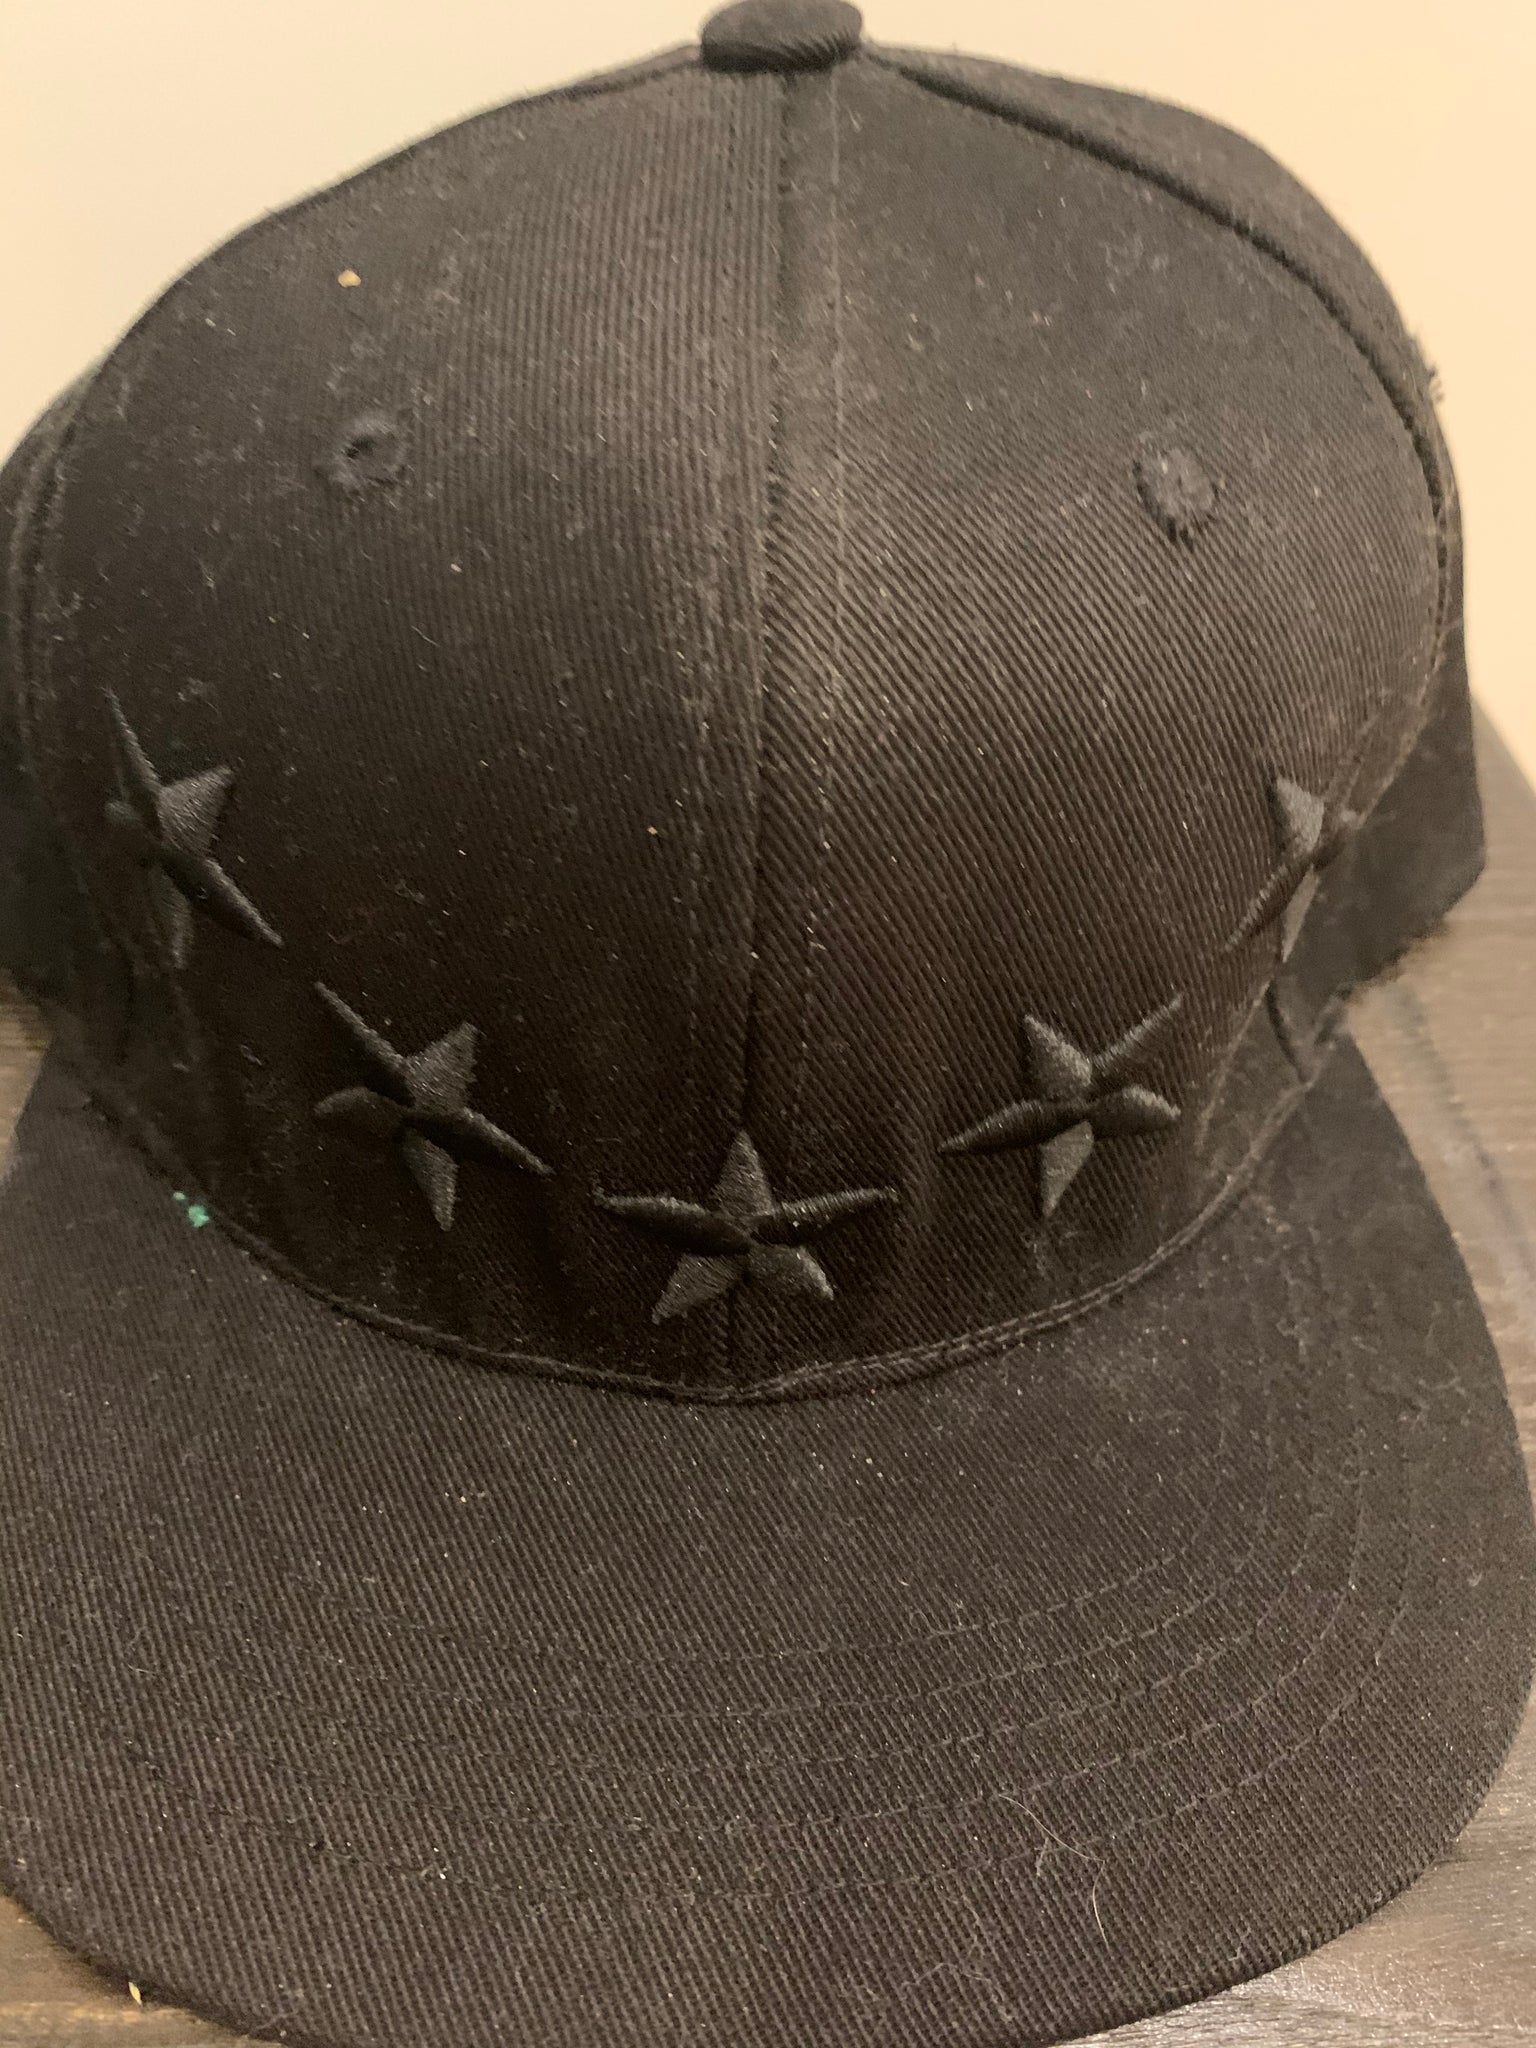 40 OZ NYC Hat - Black  Snapback